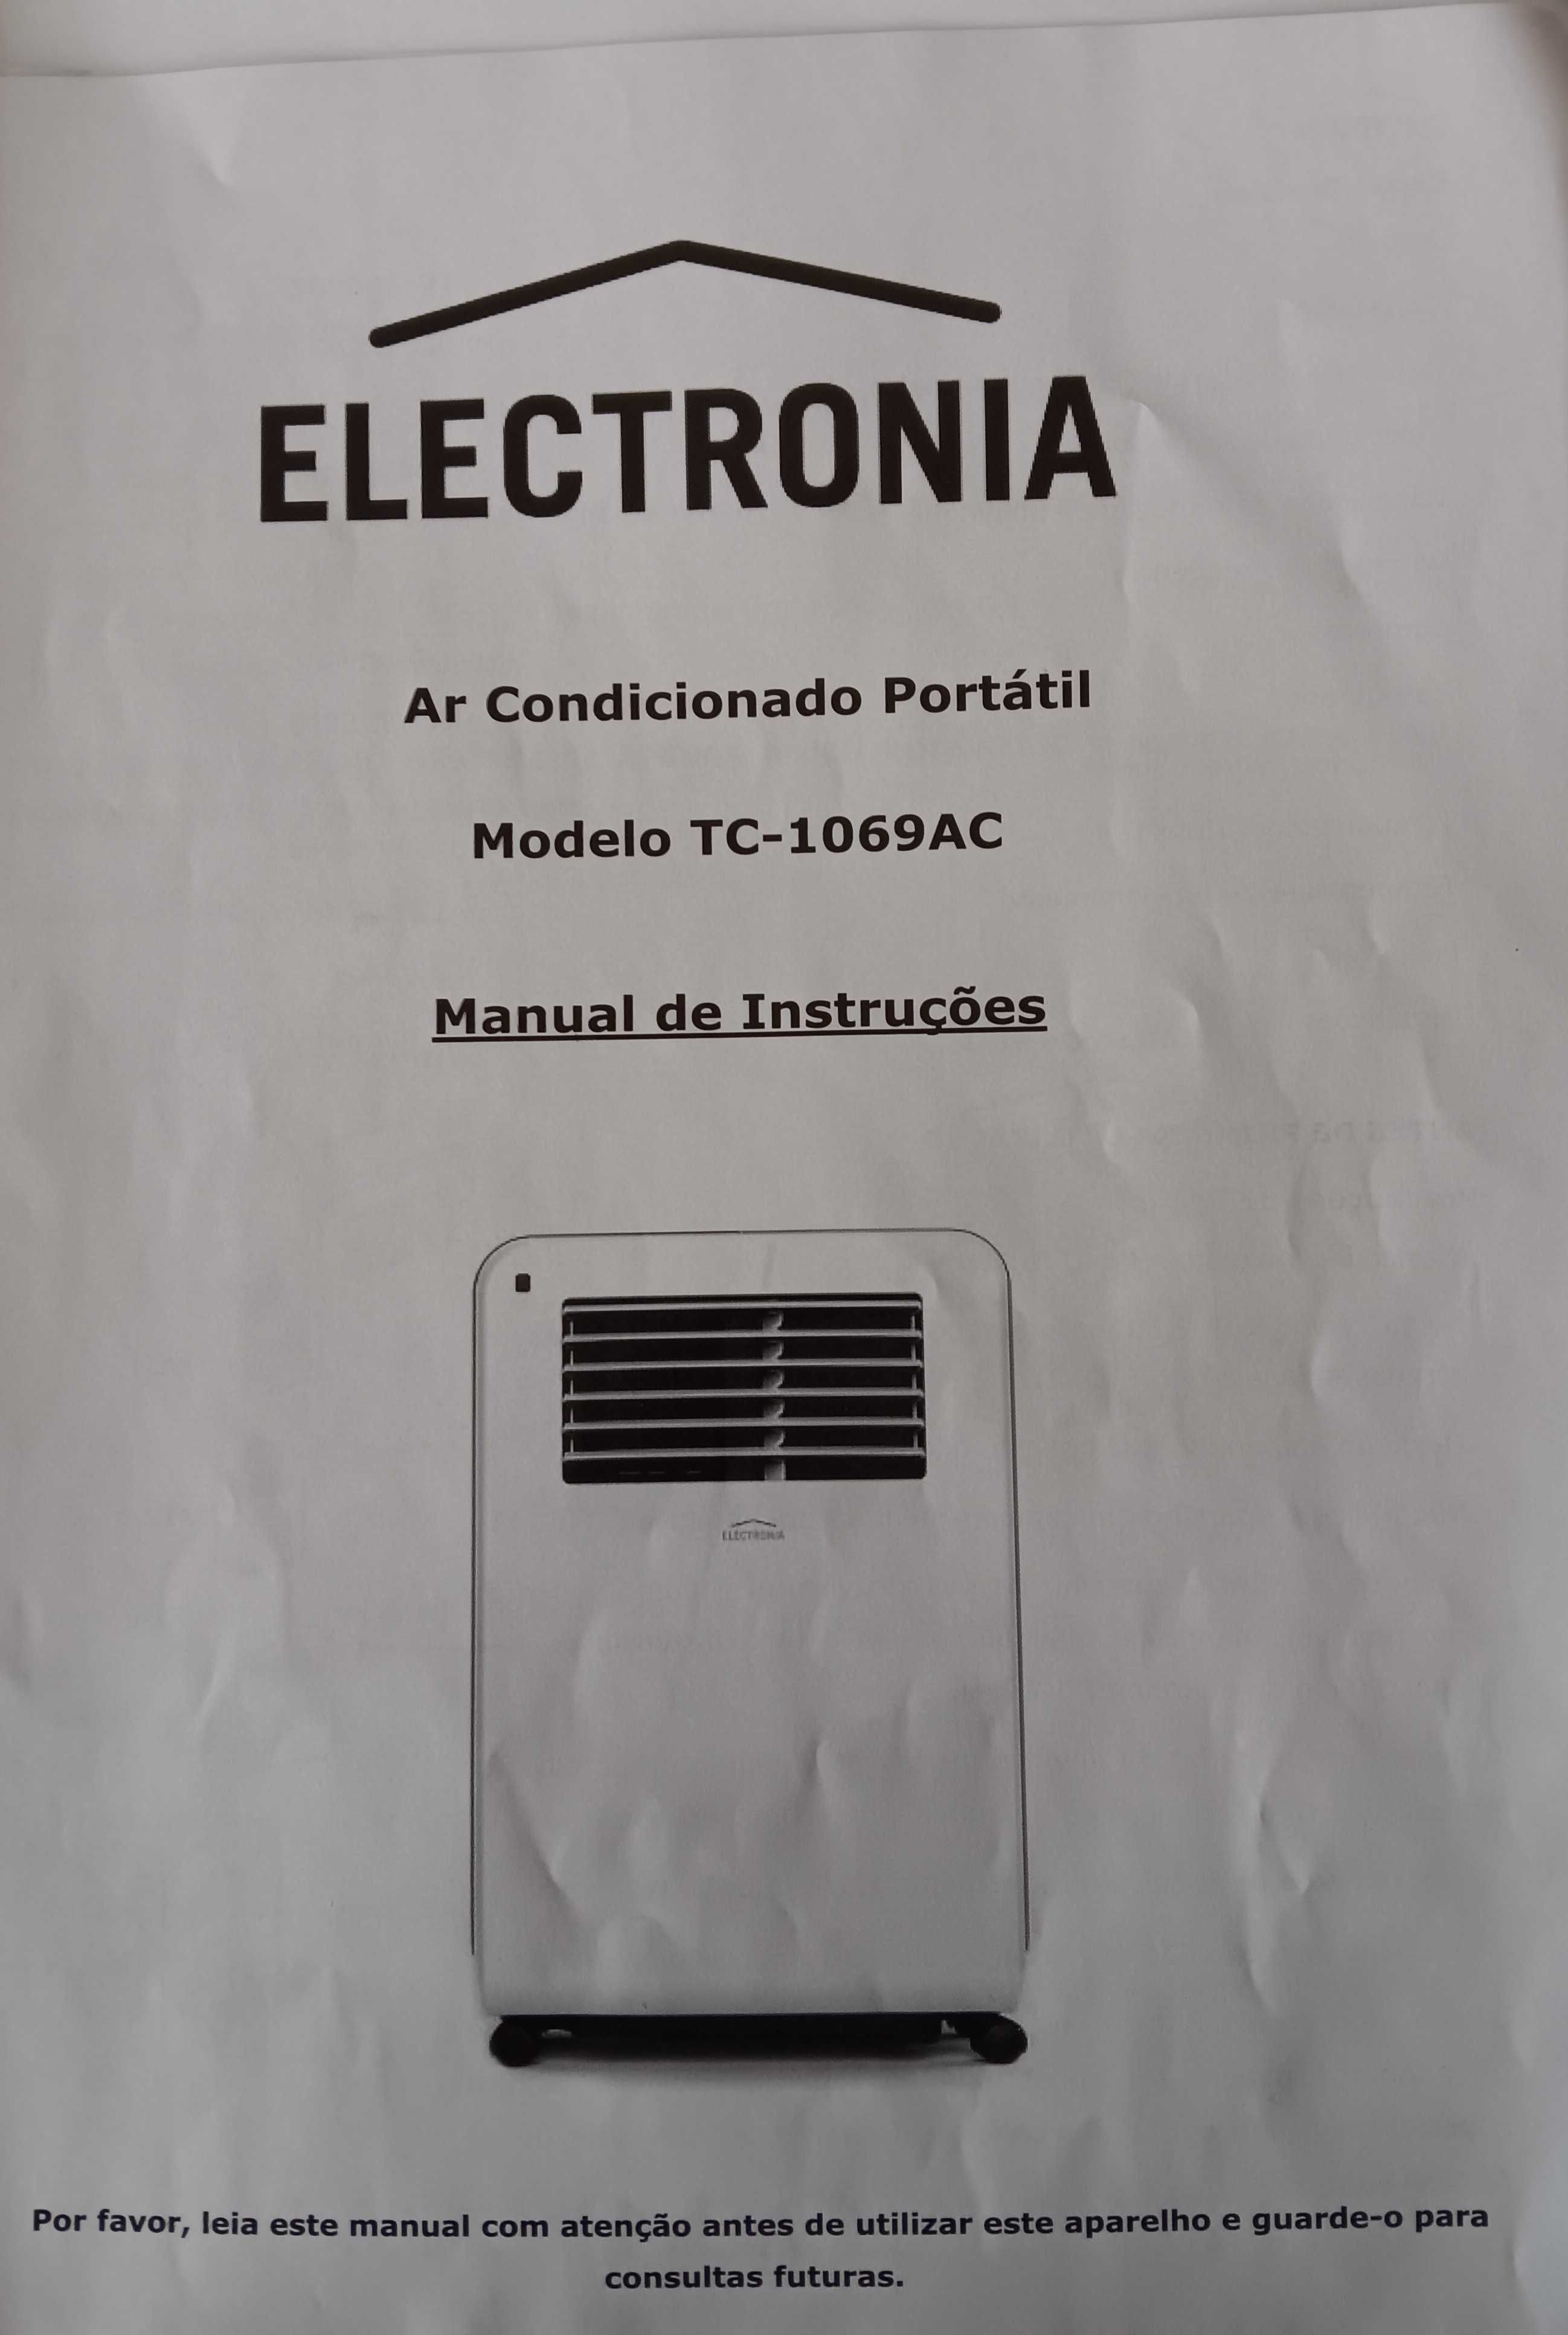 Vendo Ar Condicionado Portátil "Electronia"